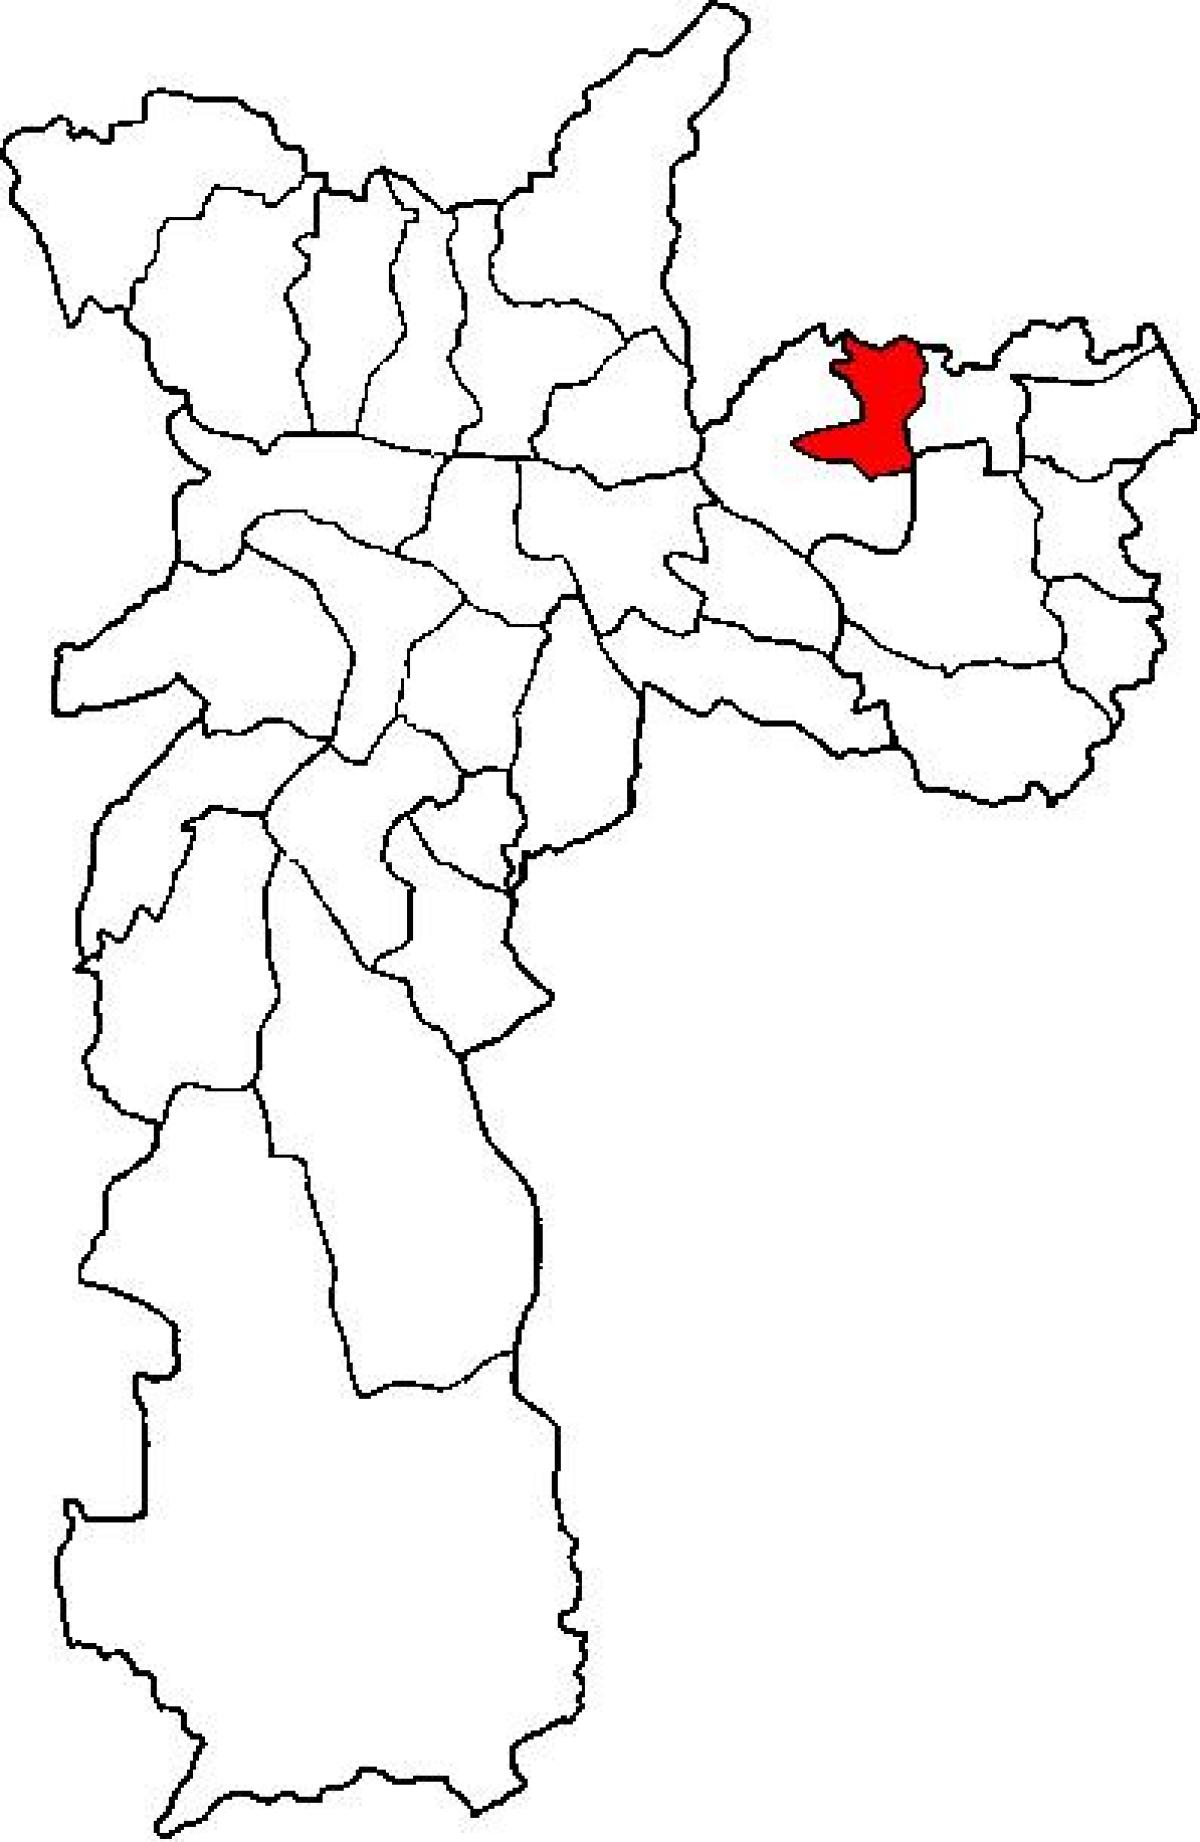 Kaart van Ermelino Matarazzo sub-prefectuur São Paulo